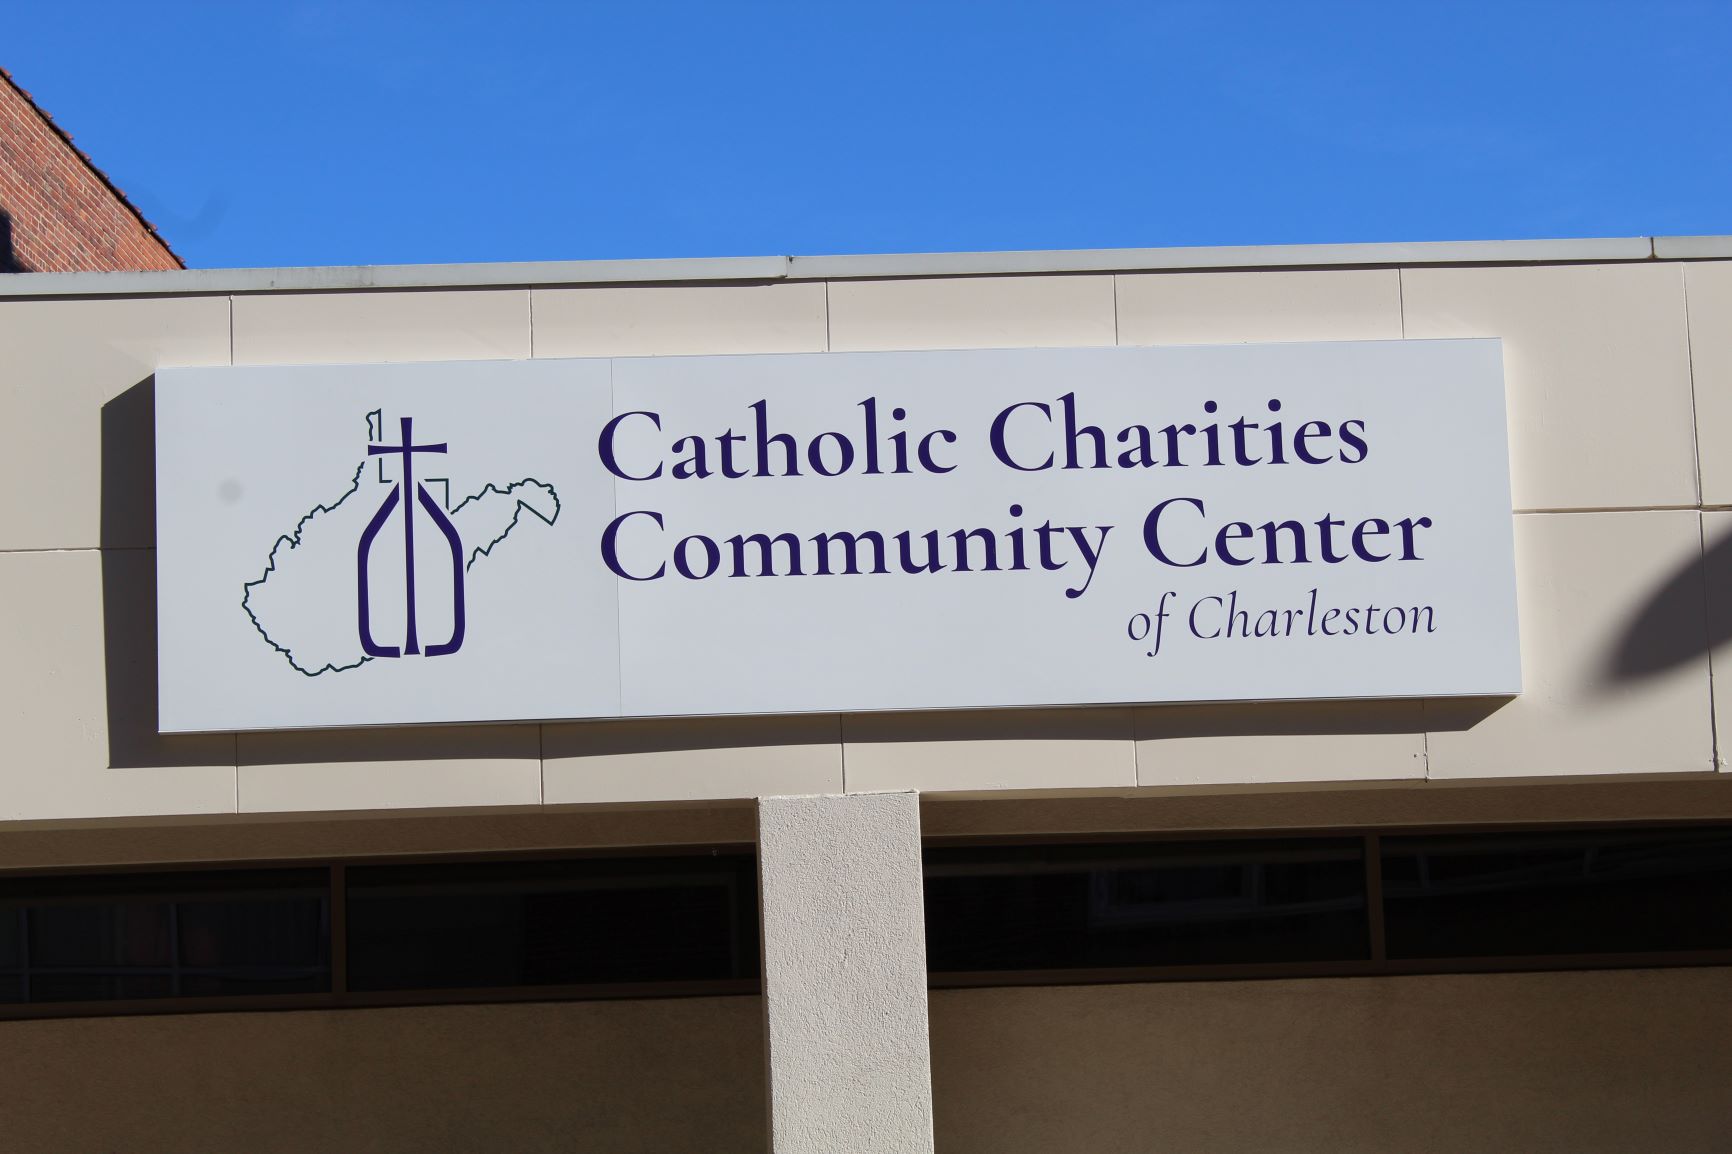 Catholic Charities Community Center on Quarrier Street in Charleston, West Virginia